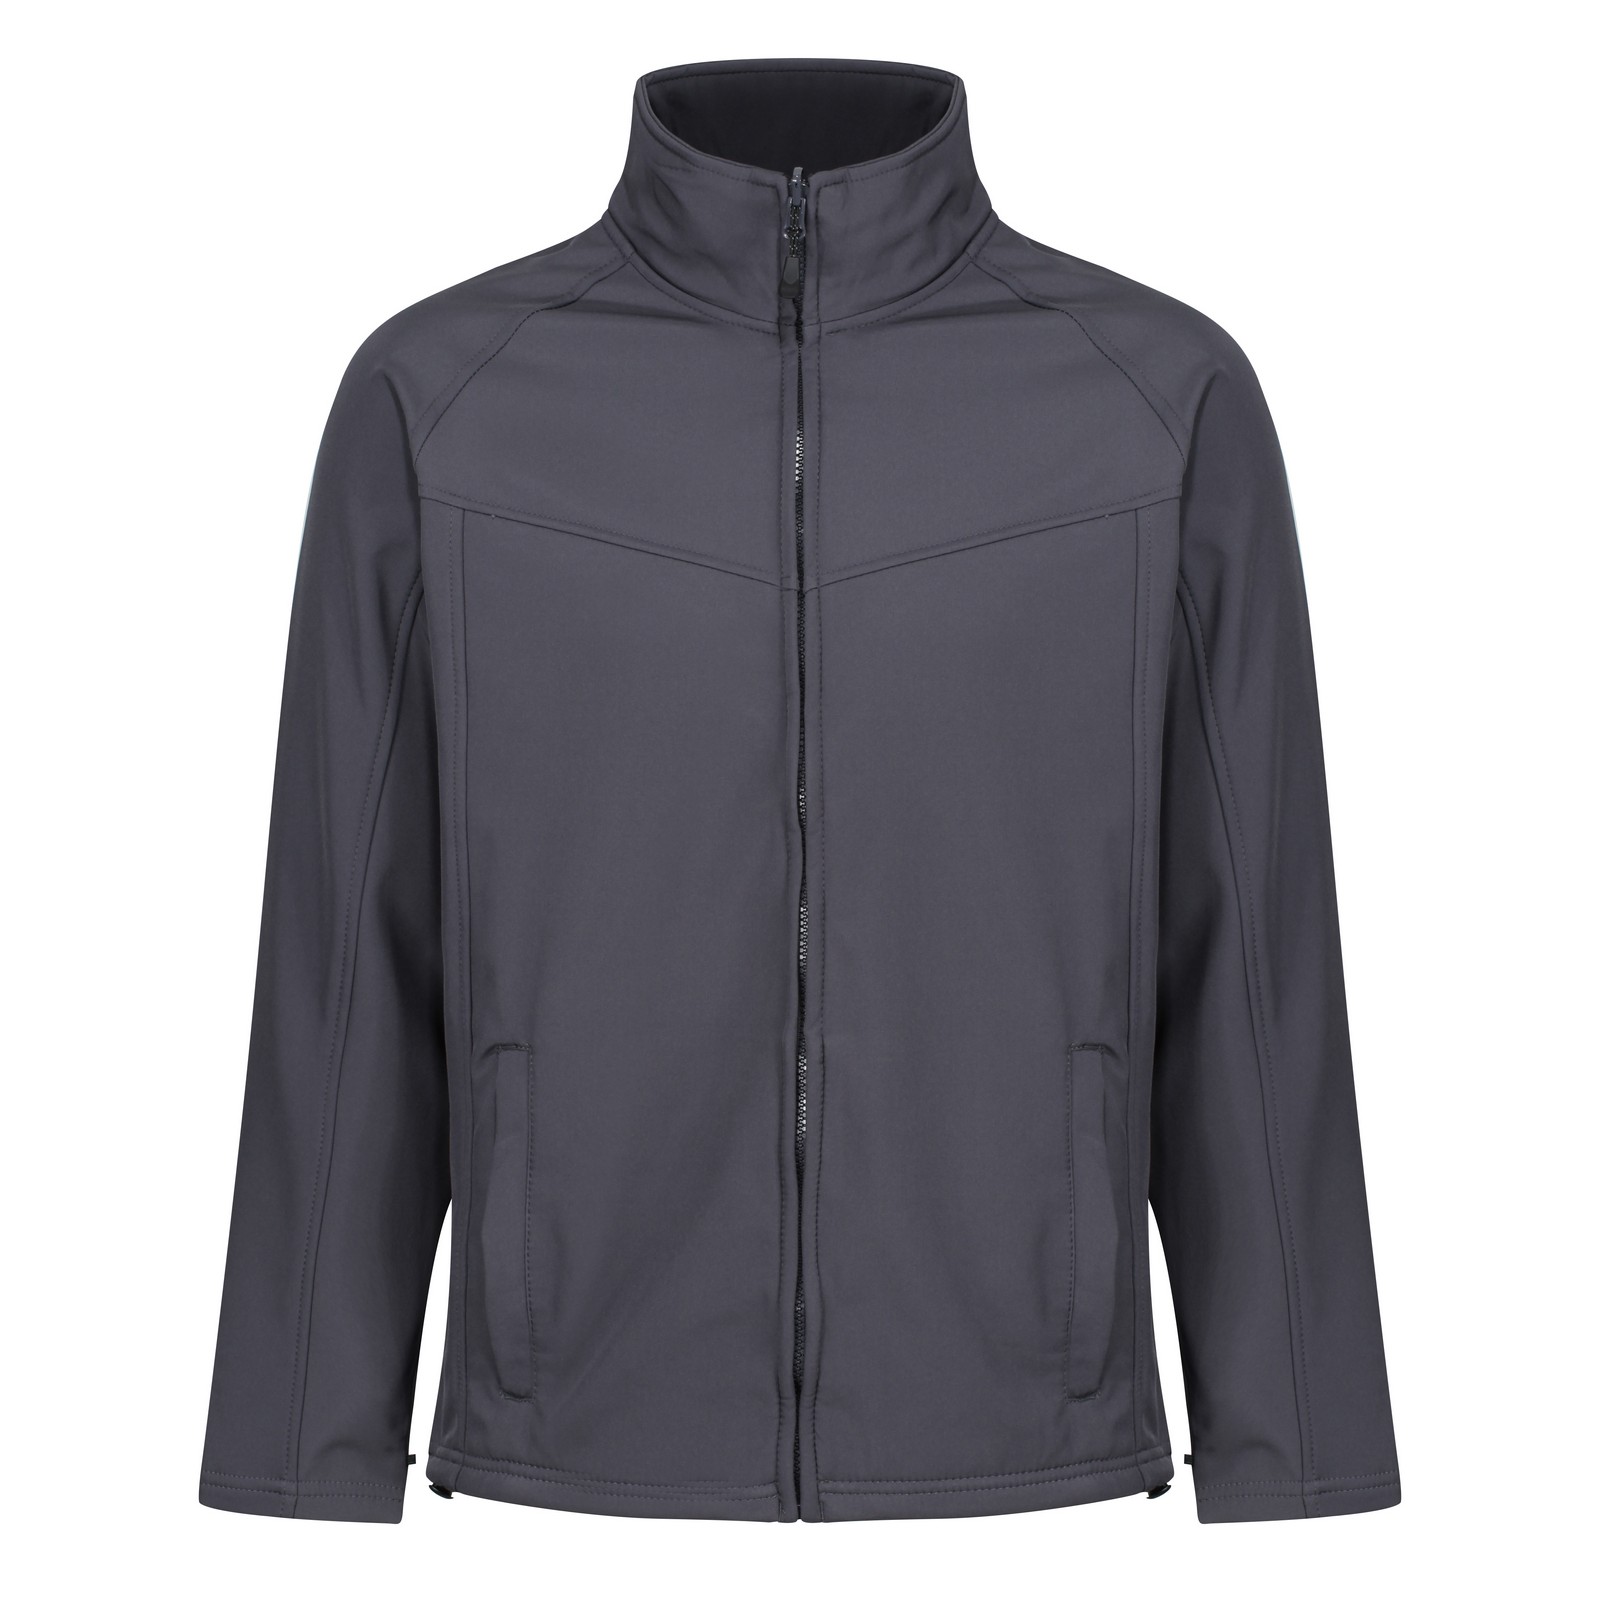 Regatta Uproar softshell jacket | WISE Worksafe